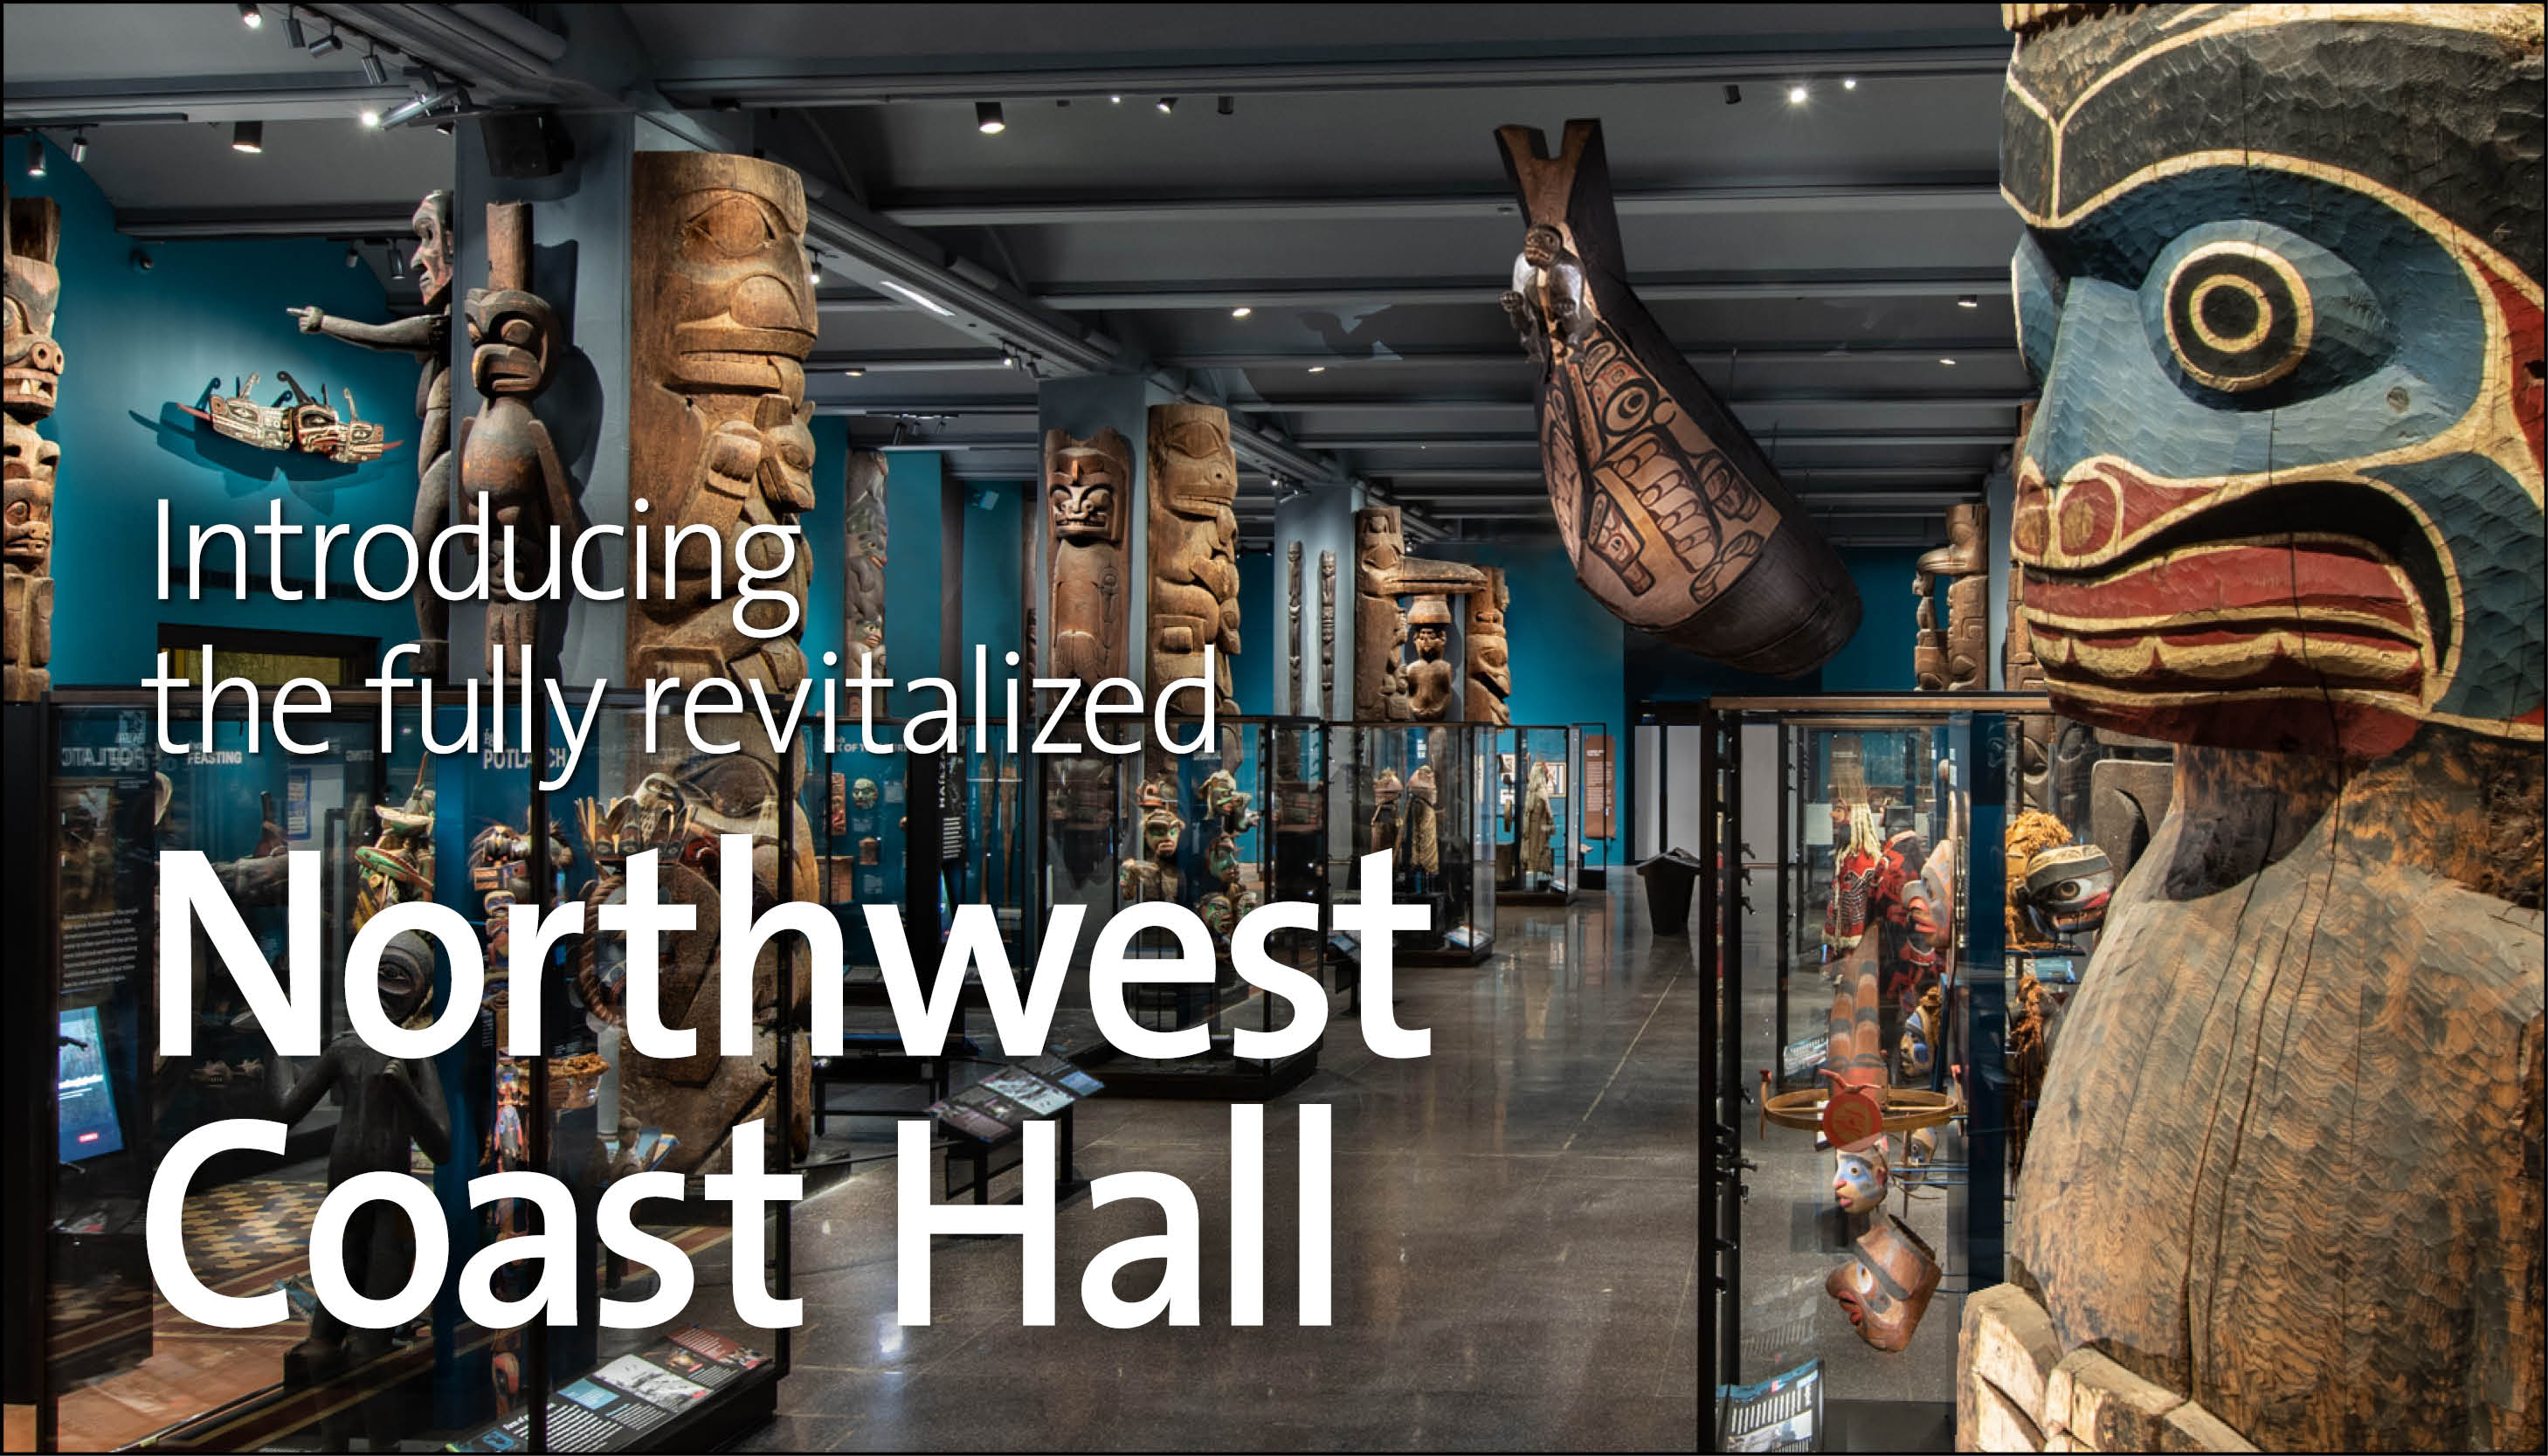 Introducing the fully revitalized Northwest Coast Hall